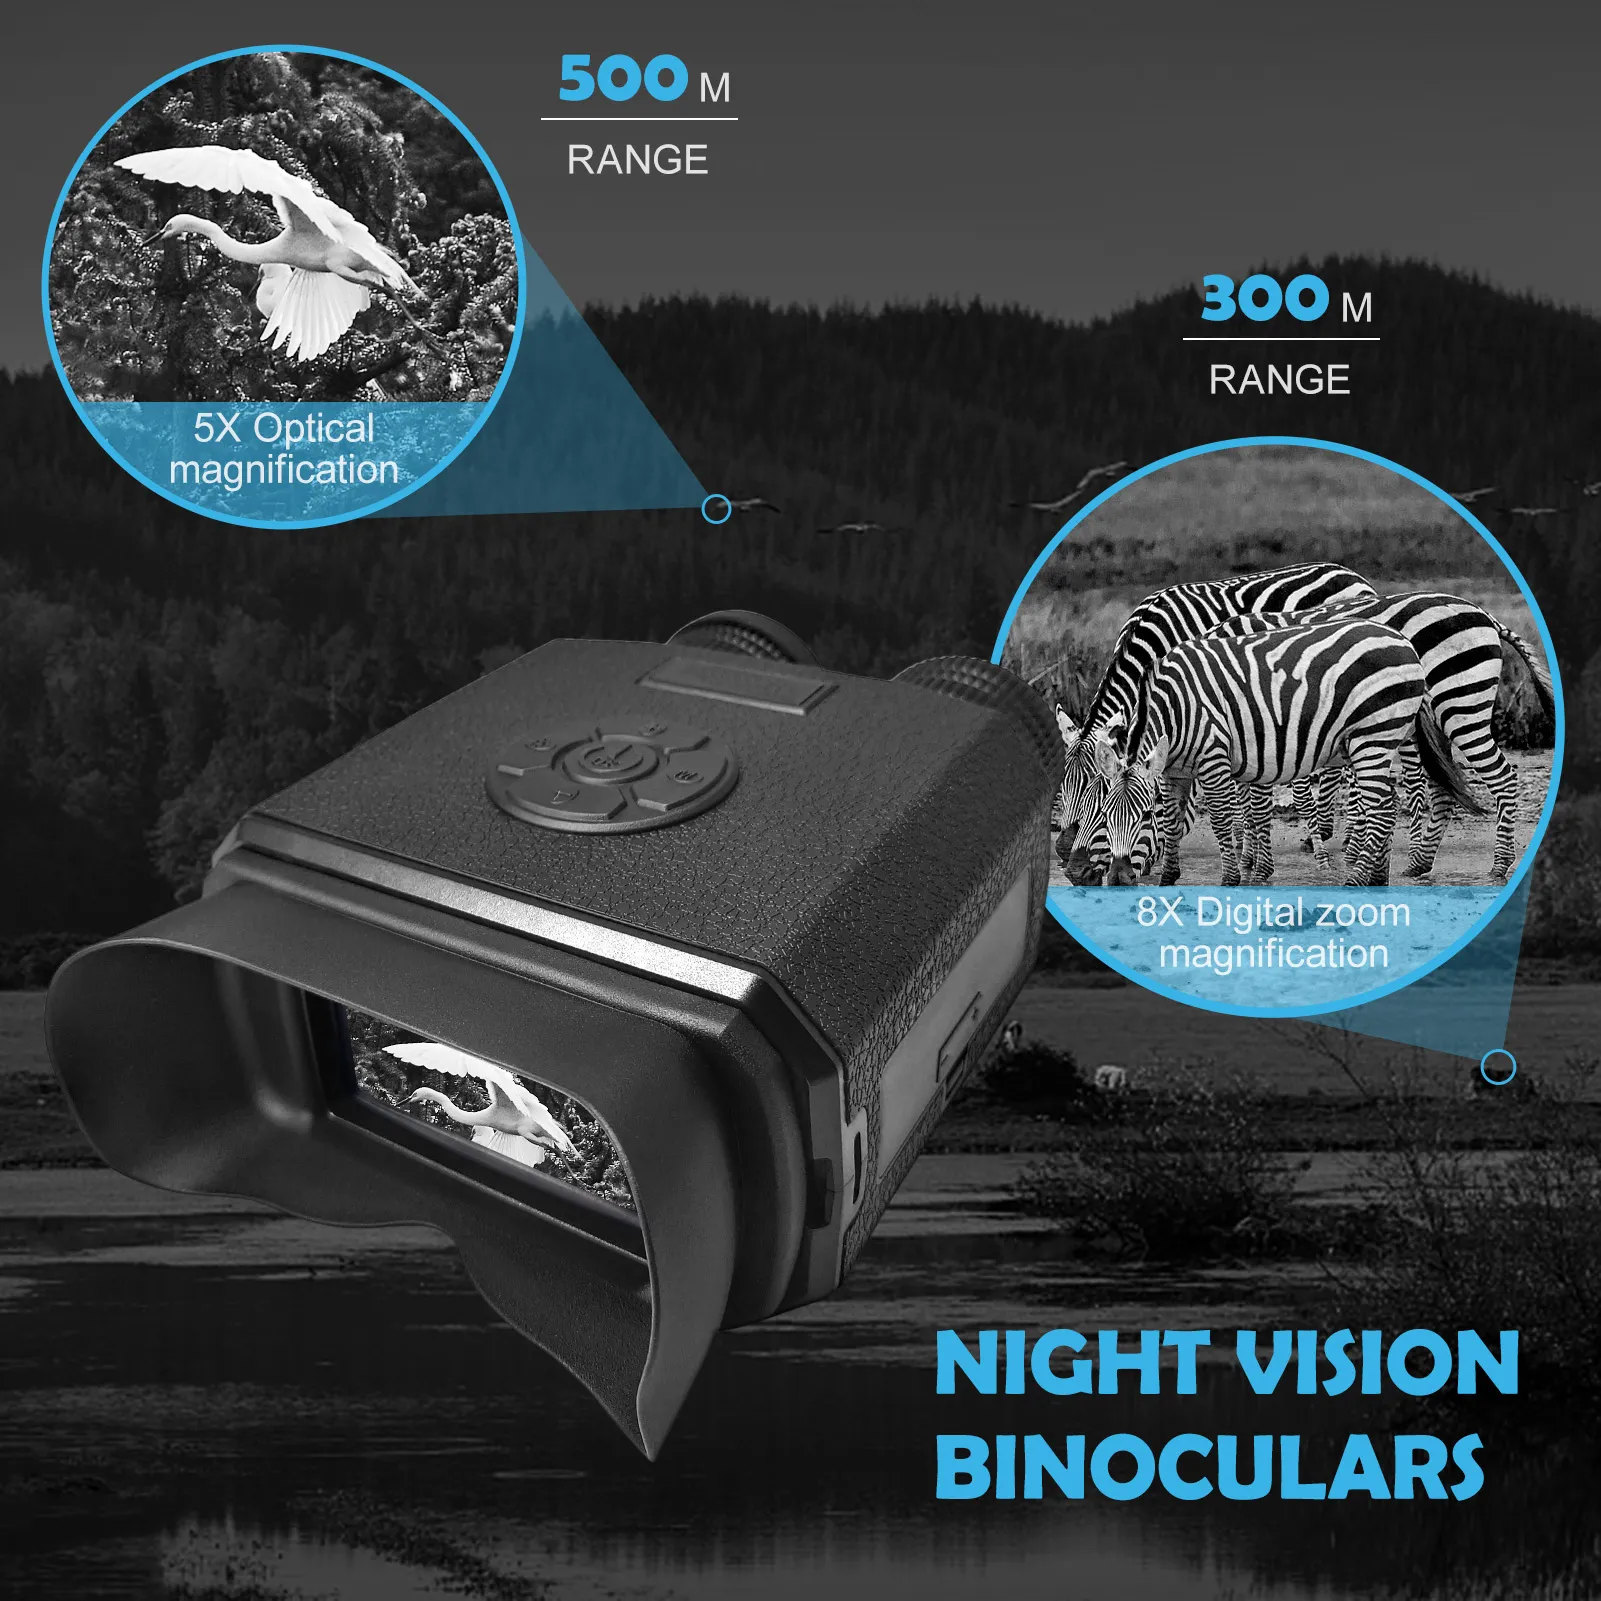 BekinTek Night Vision Binoculars Telescope IR Infrared Goggles 500m Full Dark Observing Distance 5x Optics 8x Digital Zoom Built-in Rechargeable Battery